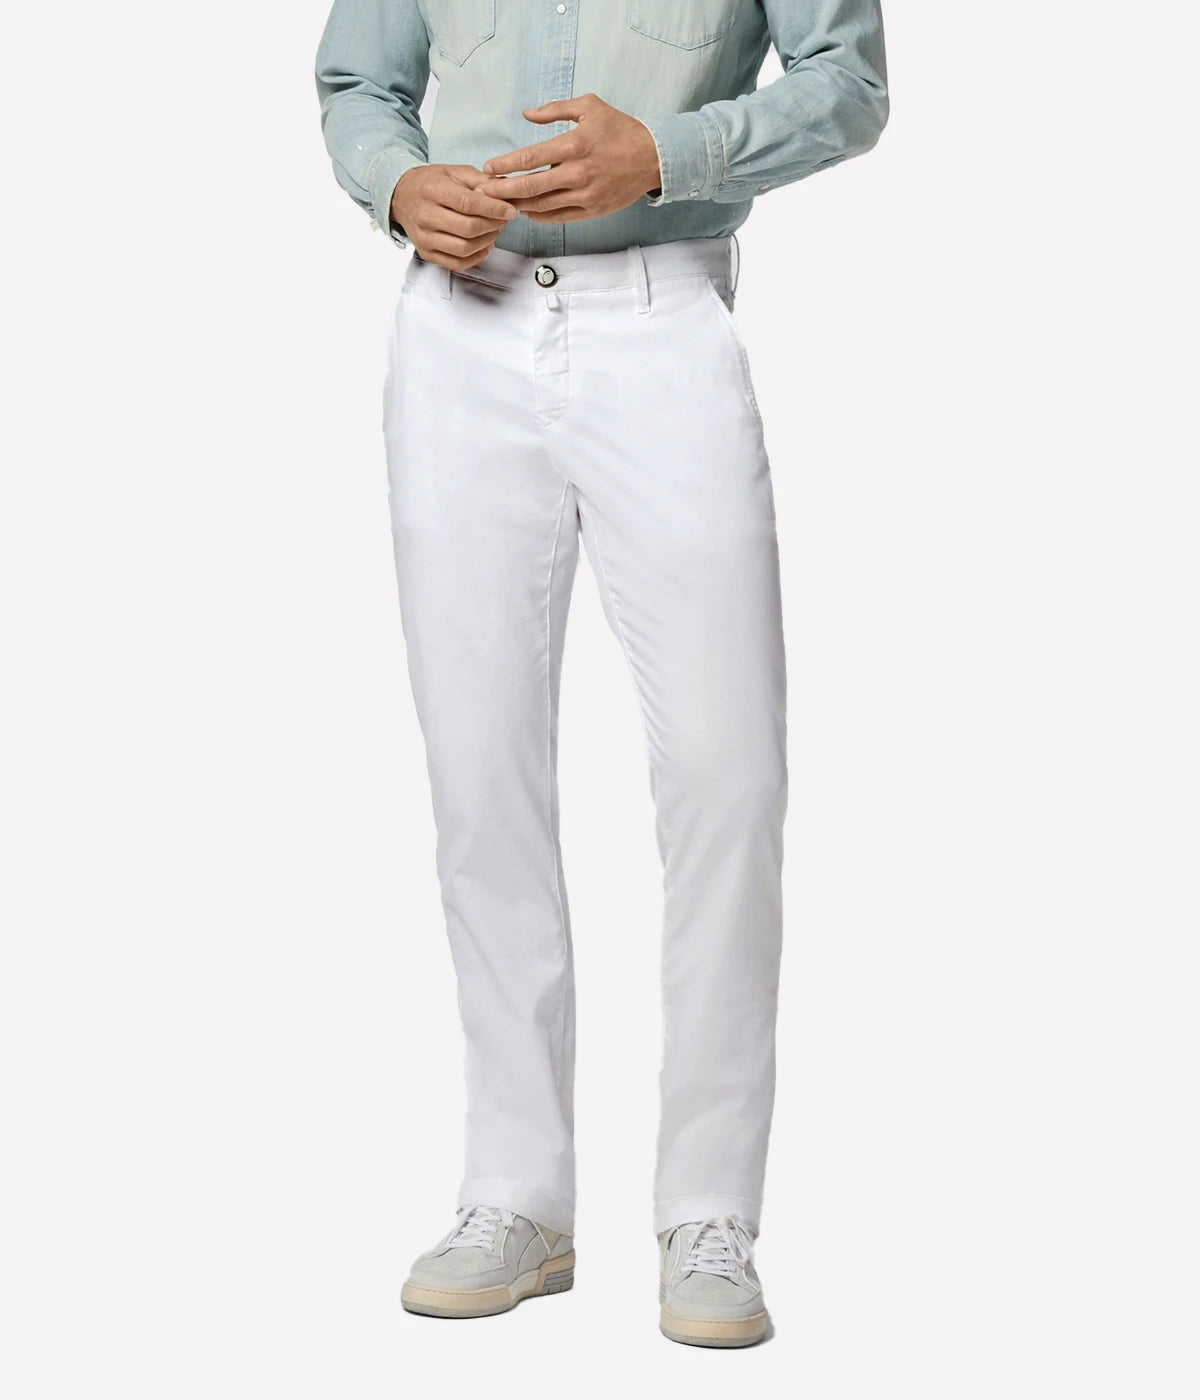 Bobby Slim Fit Pants in White